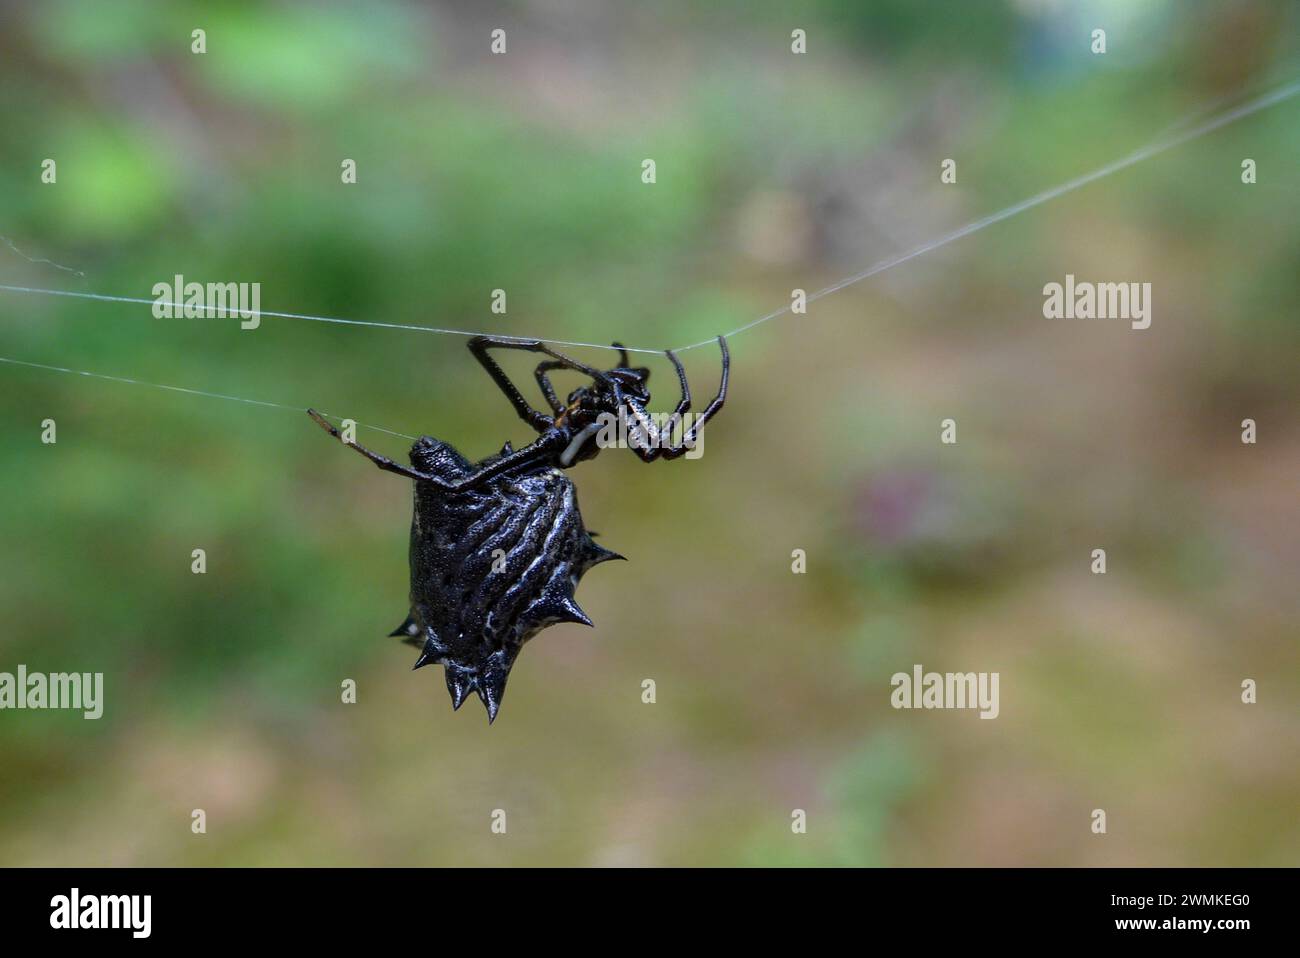 Spined Micrathena spider (Micrathena gracilis) crawling across its web silk Stock Photo